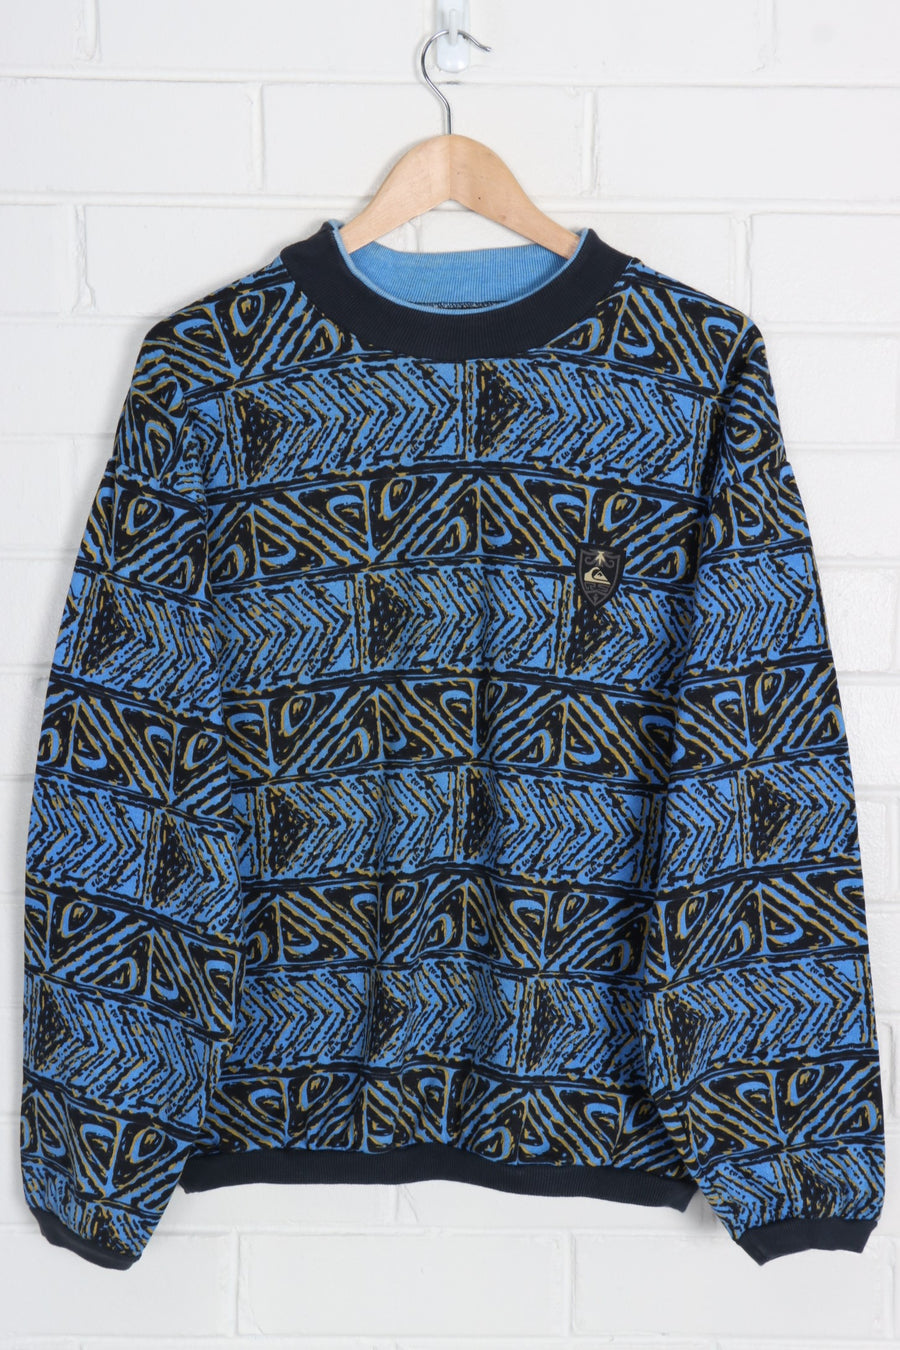 QUIKSILVER All Over Logo Print Blue & Black Surf Sweatshirt (L-XL)